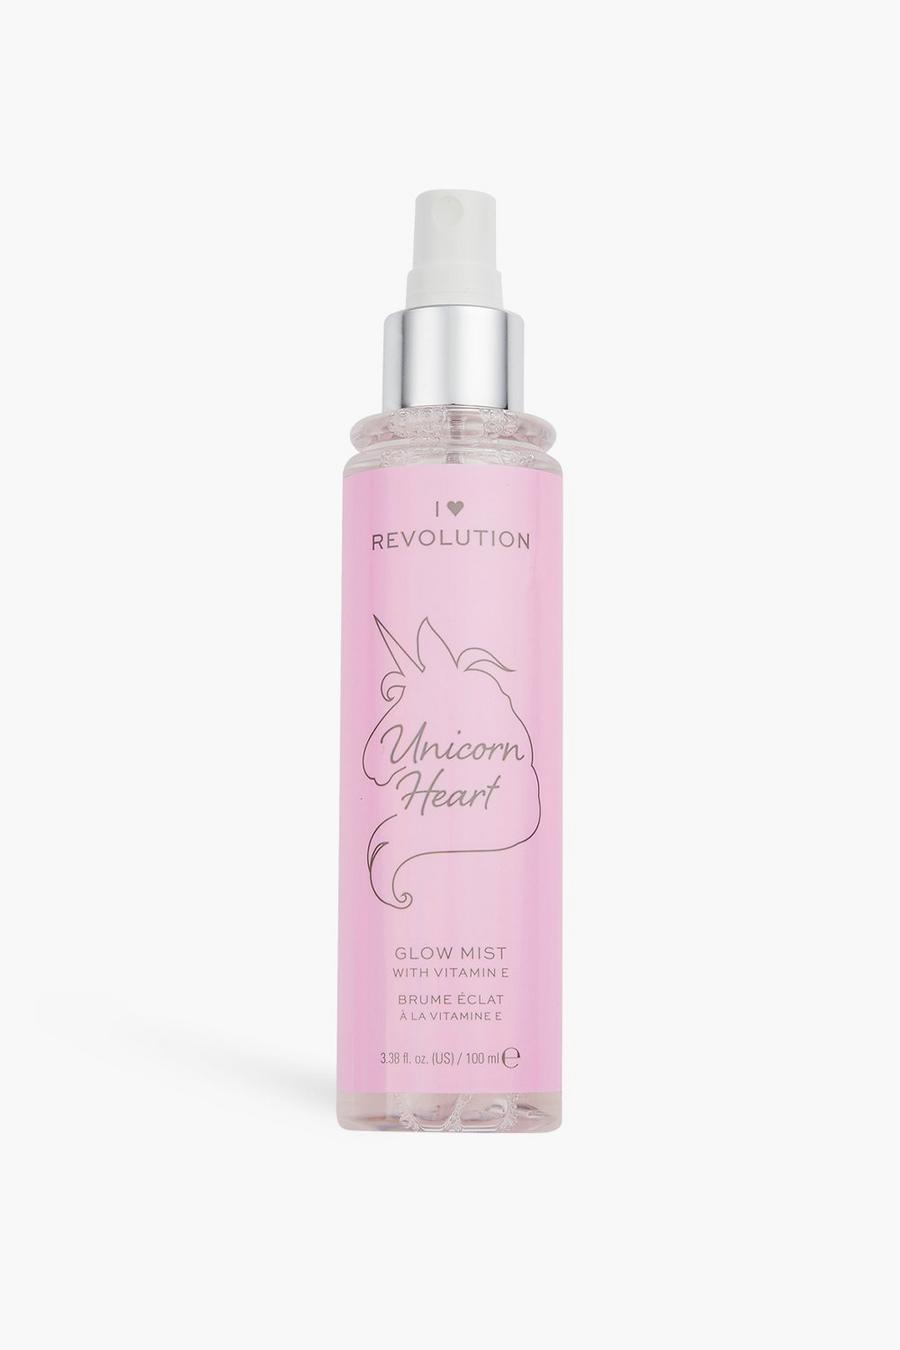 I Heart Revolution - Unicorn Heart - Brume éclat, Rose pink